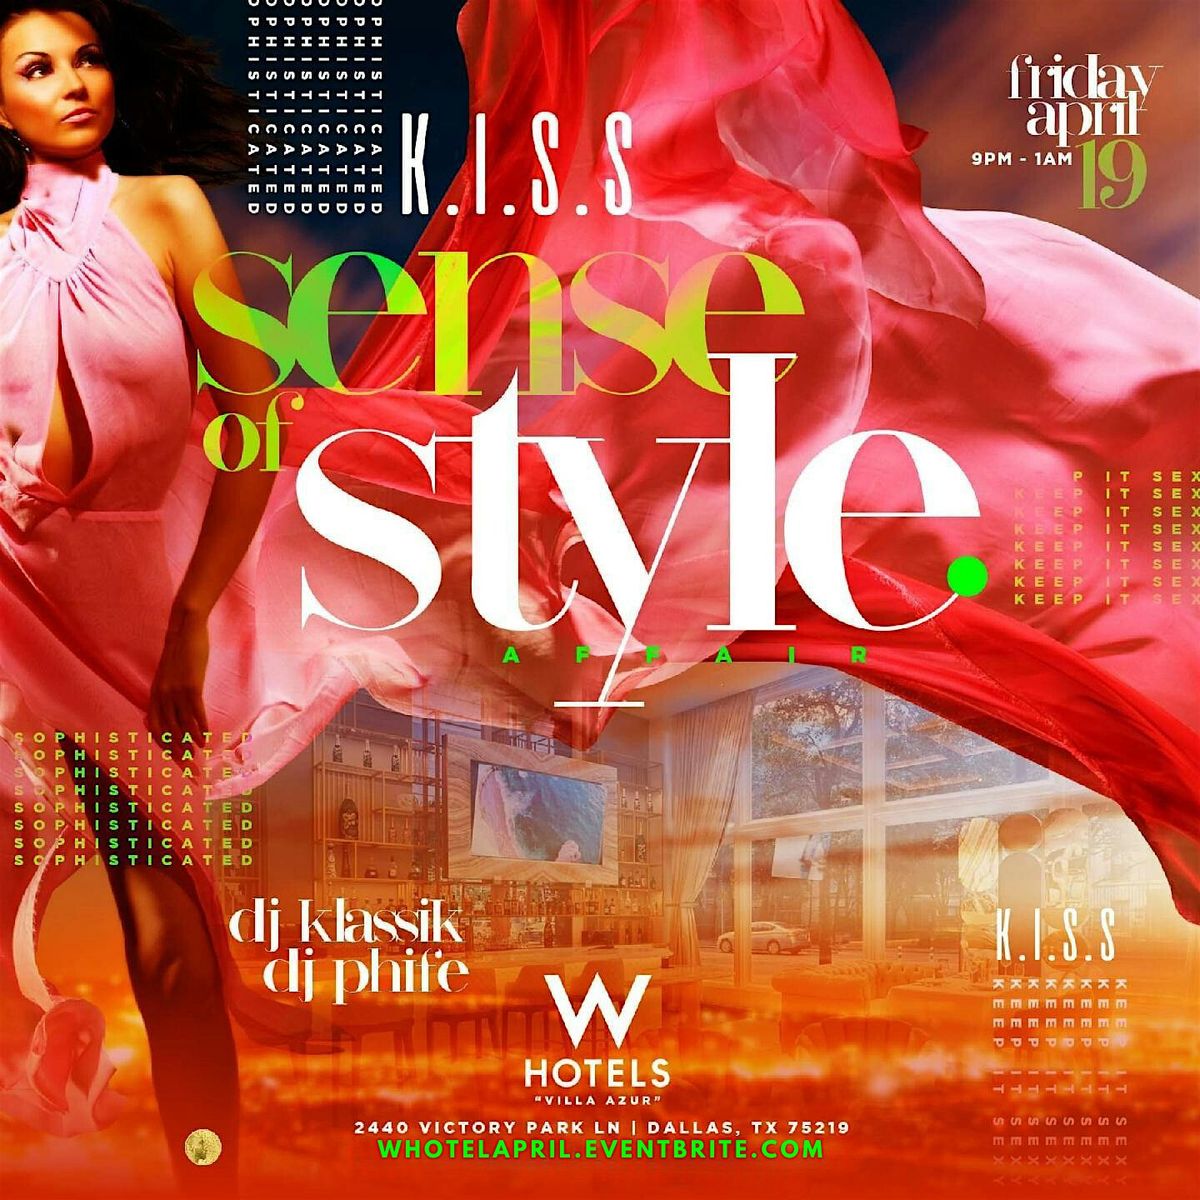 K.I.S.S. | Keep It Sexy & Sophisticated @ Villa Azur (W Hotel)